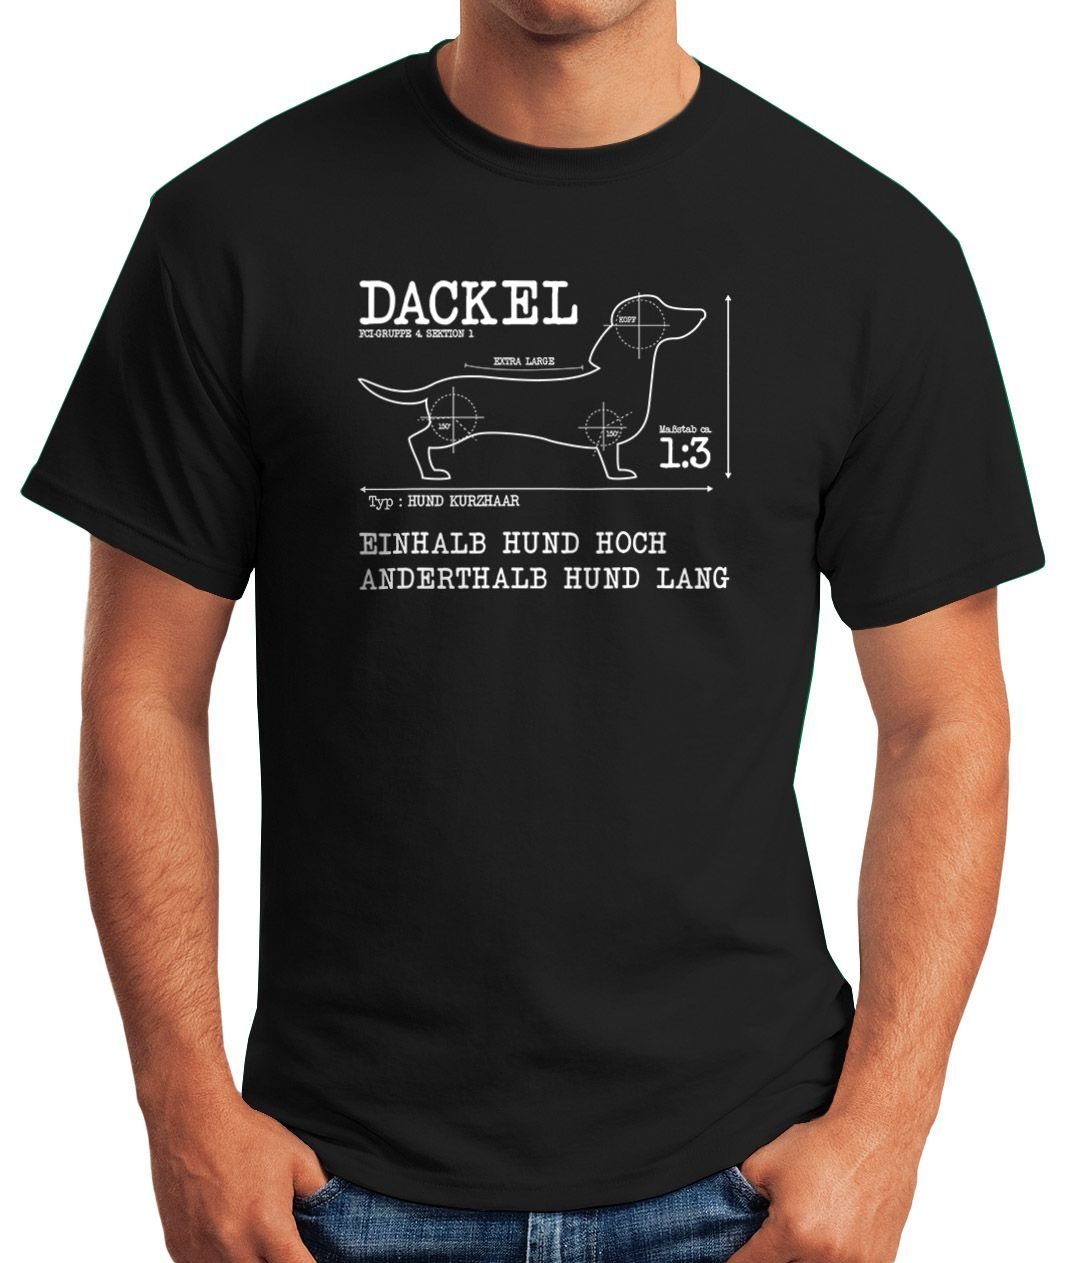 MoonWorks Print-Shirt Herren T-Shirt Motiv Gassi Hunde Dackel Print mit lustiges Shirt Moonworks®